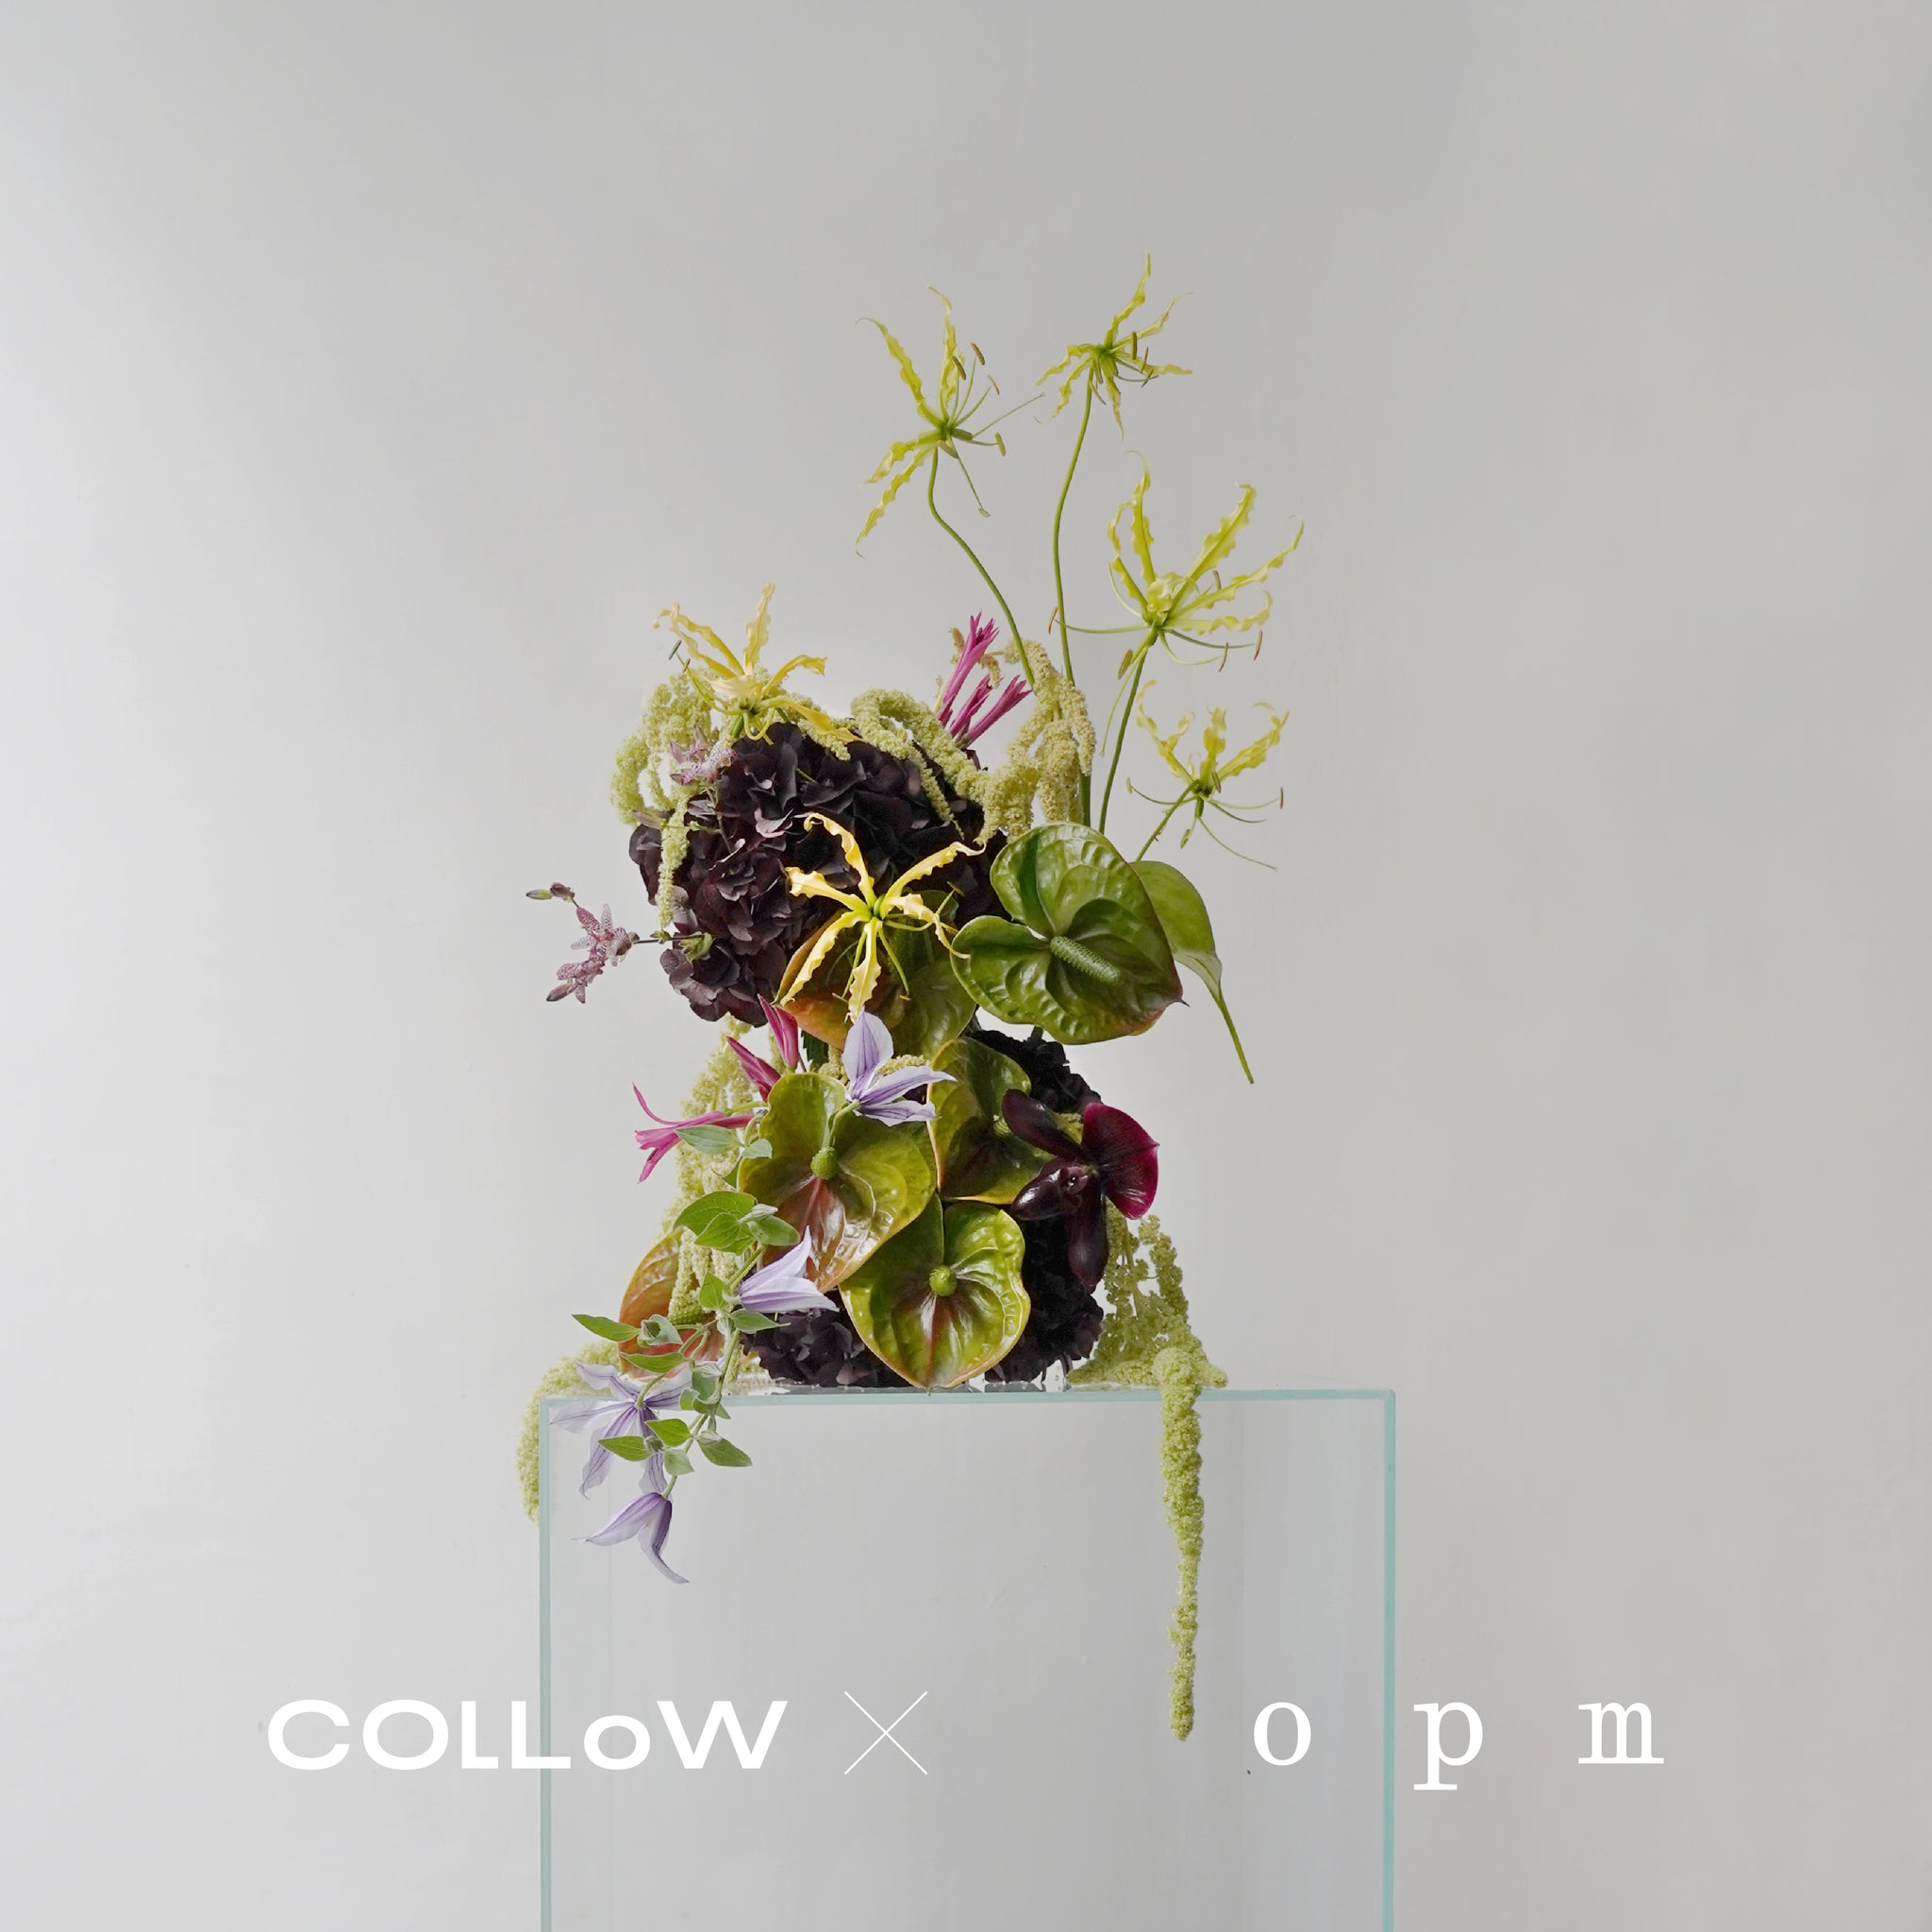 COLLoW ╳ opm 獨特鮮明的花藝風格是衷於自我的創作